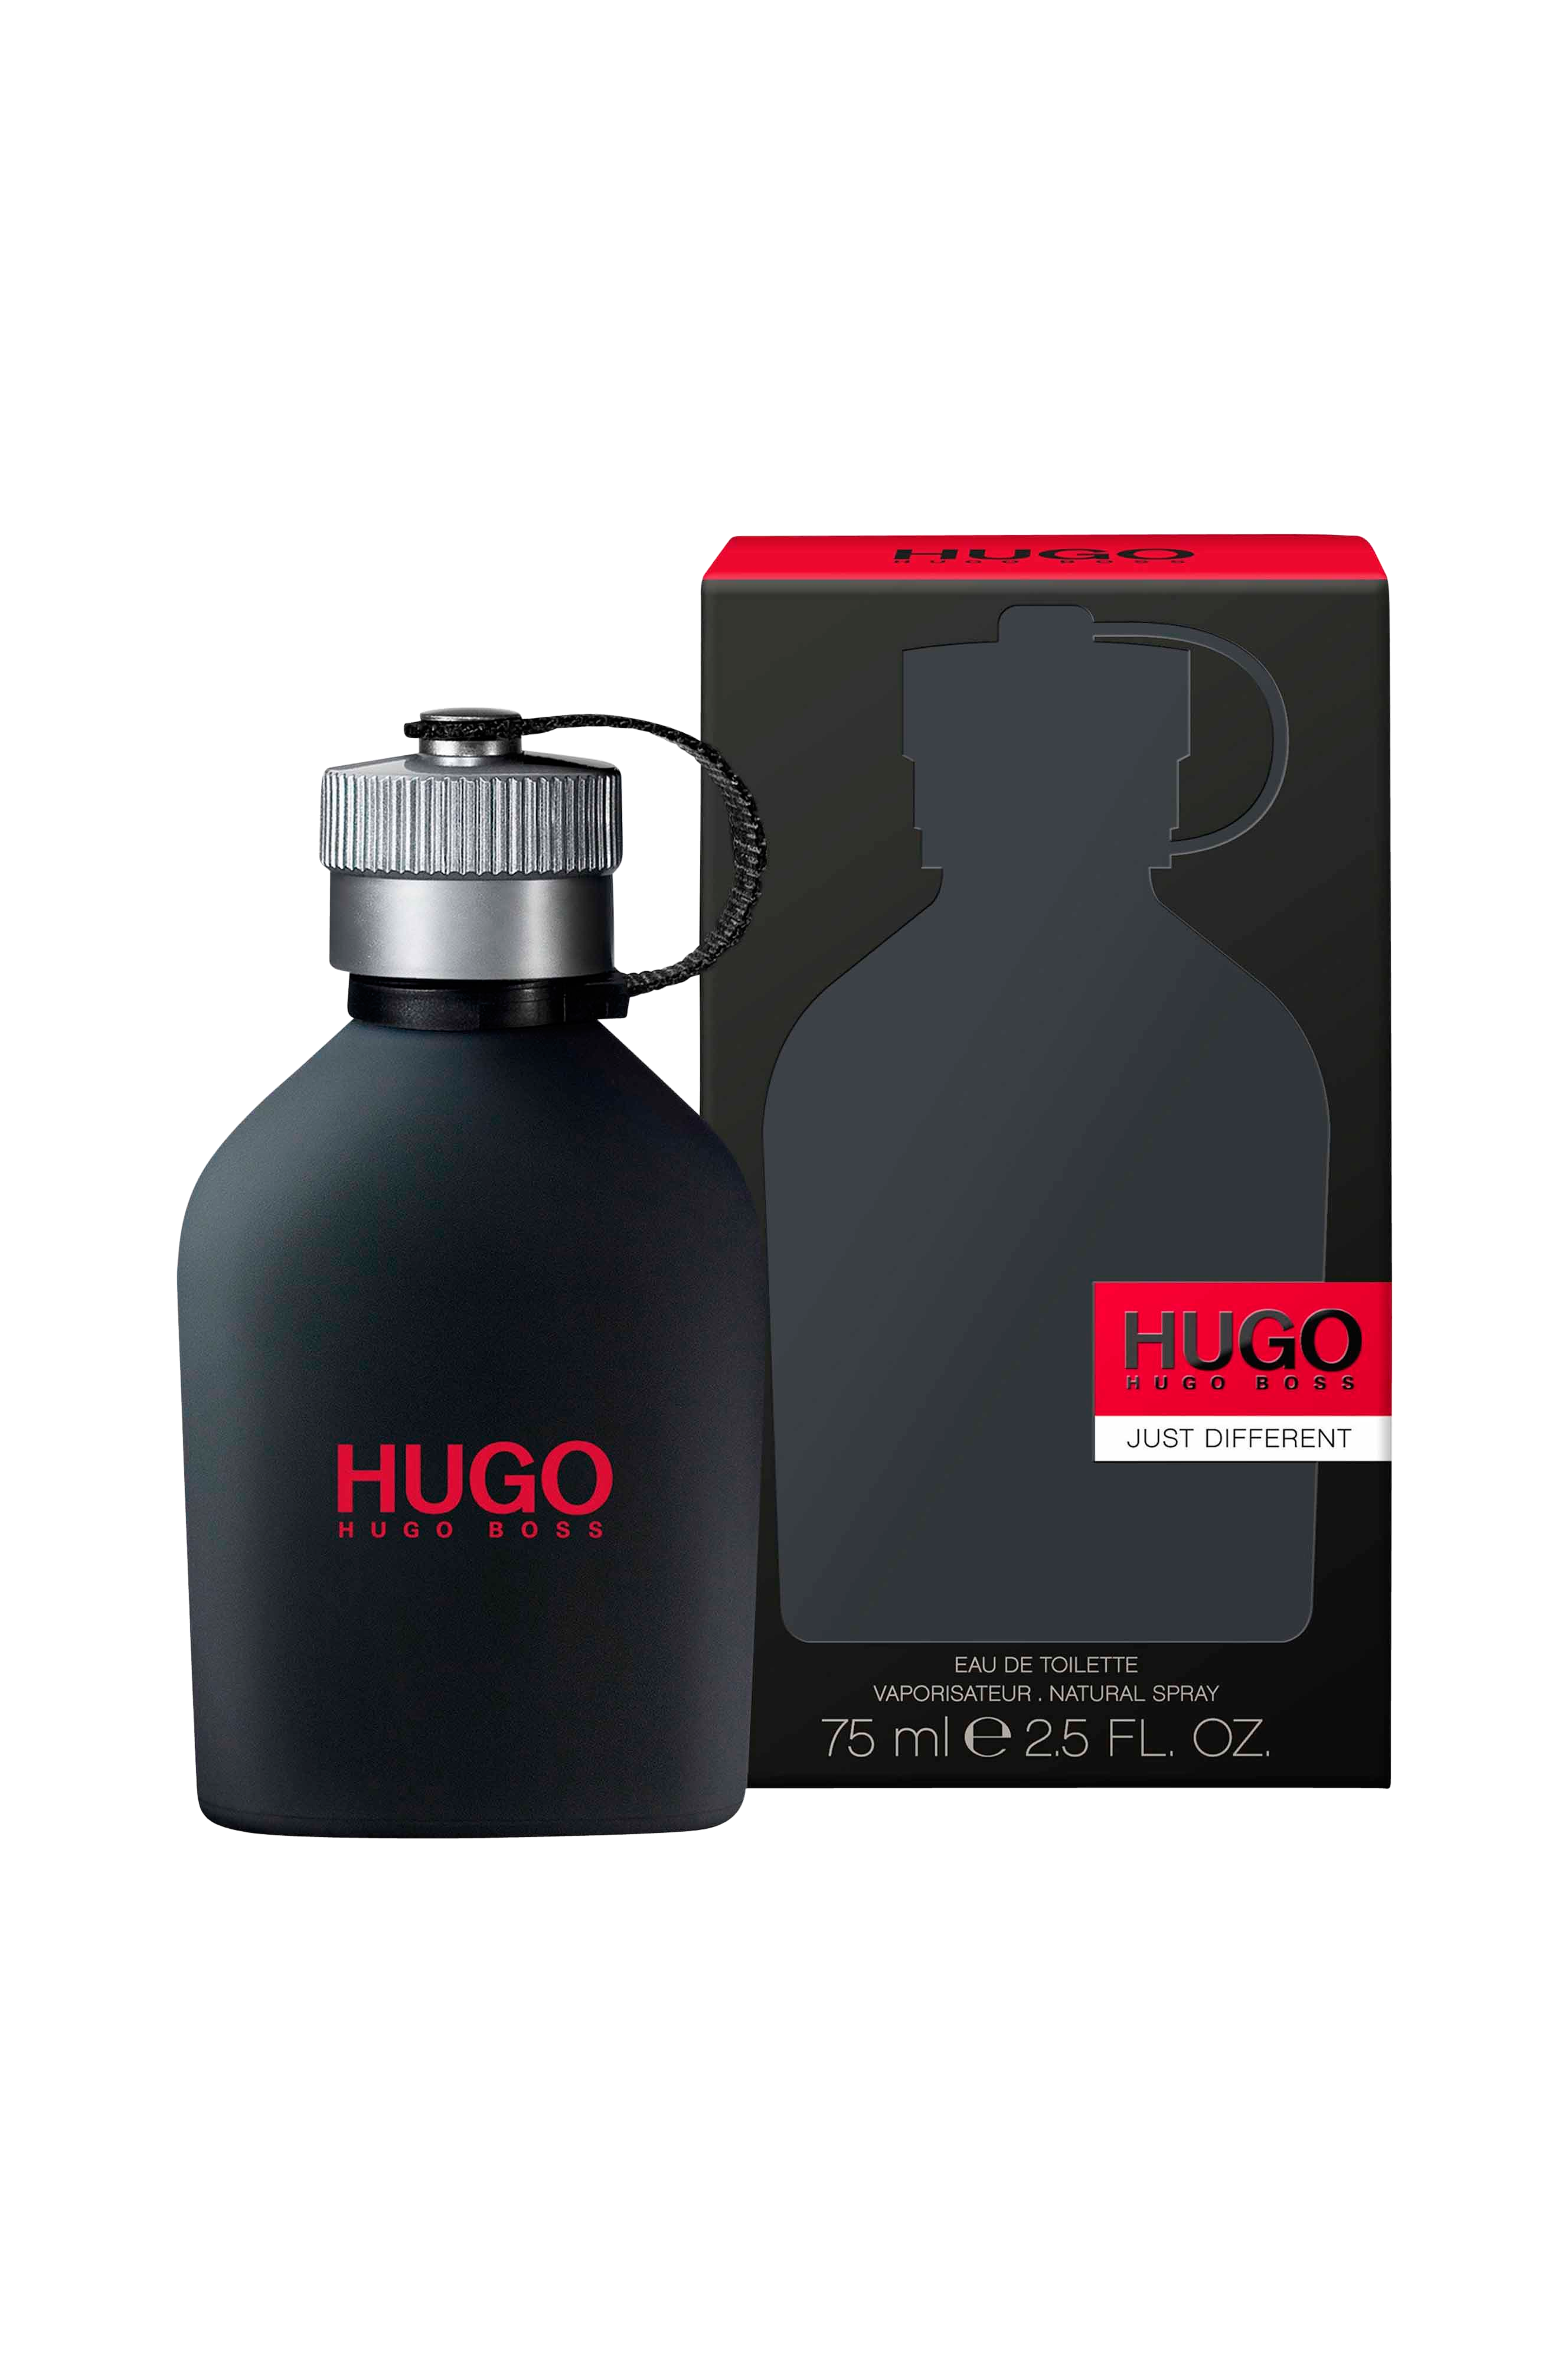 Hugo different. Hugo Boss Hugo just different. Hugo Boss just different EDT (M) 75ml. Hugo Boss "Hugo just different" EDT, 100ml. Hugo Boss Hugo just different [m] EDT - 125ml.